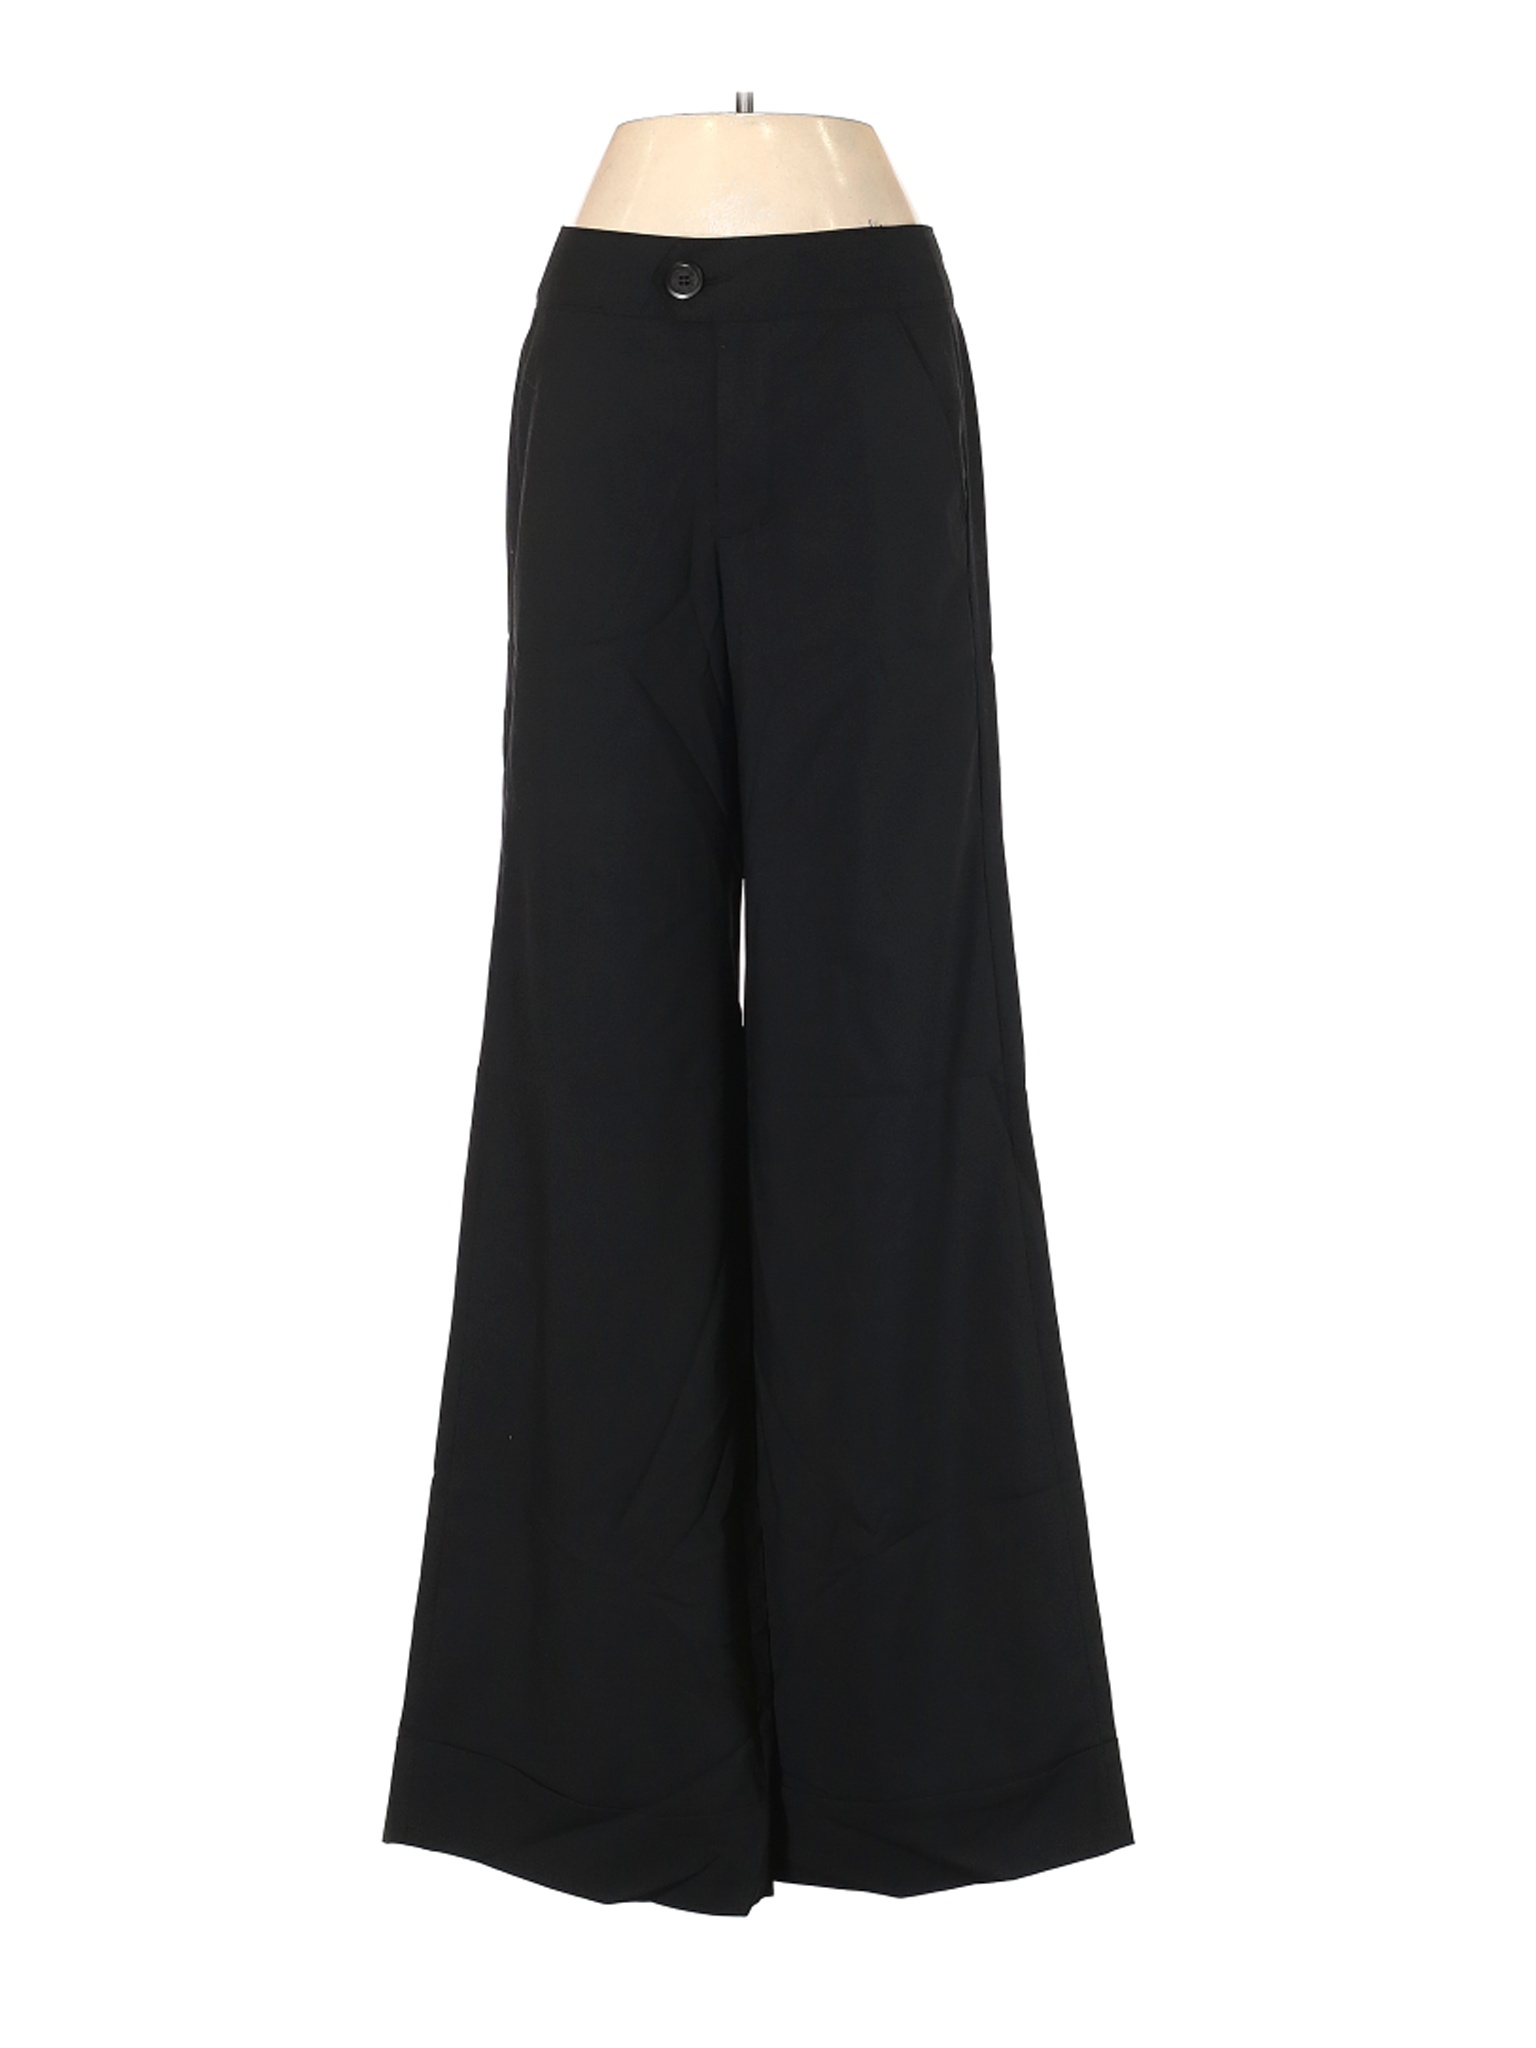 BB Dakota Solid Black Dress Pants Size 4 - 74% off | thredUP